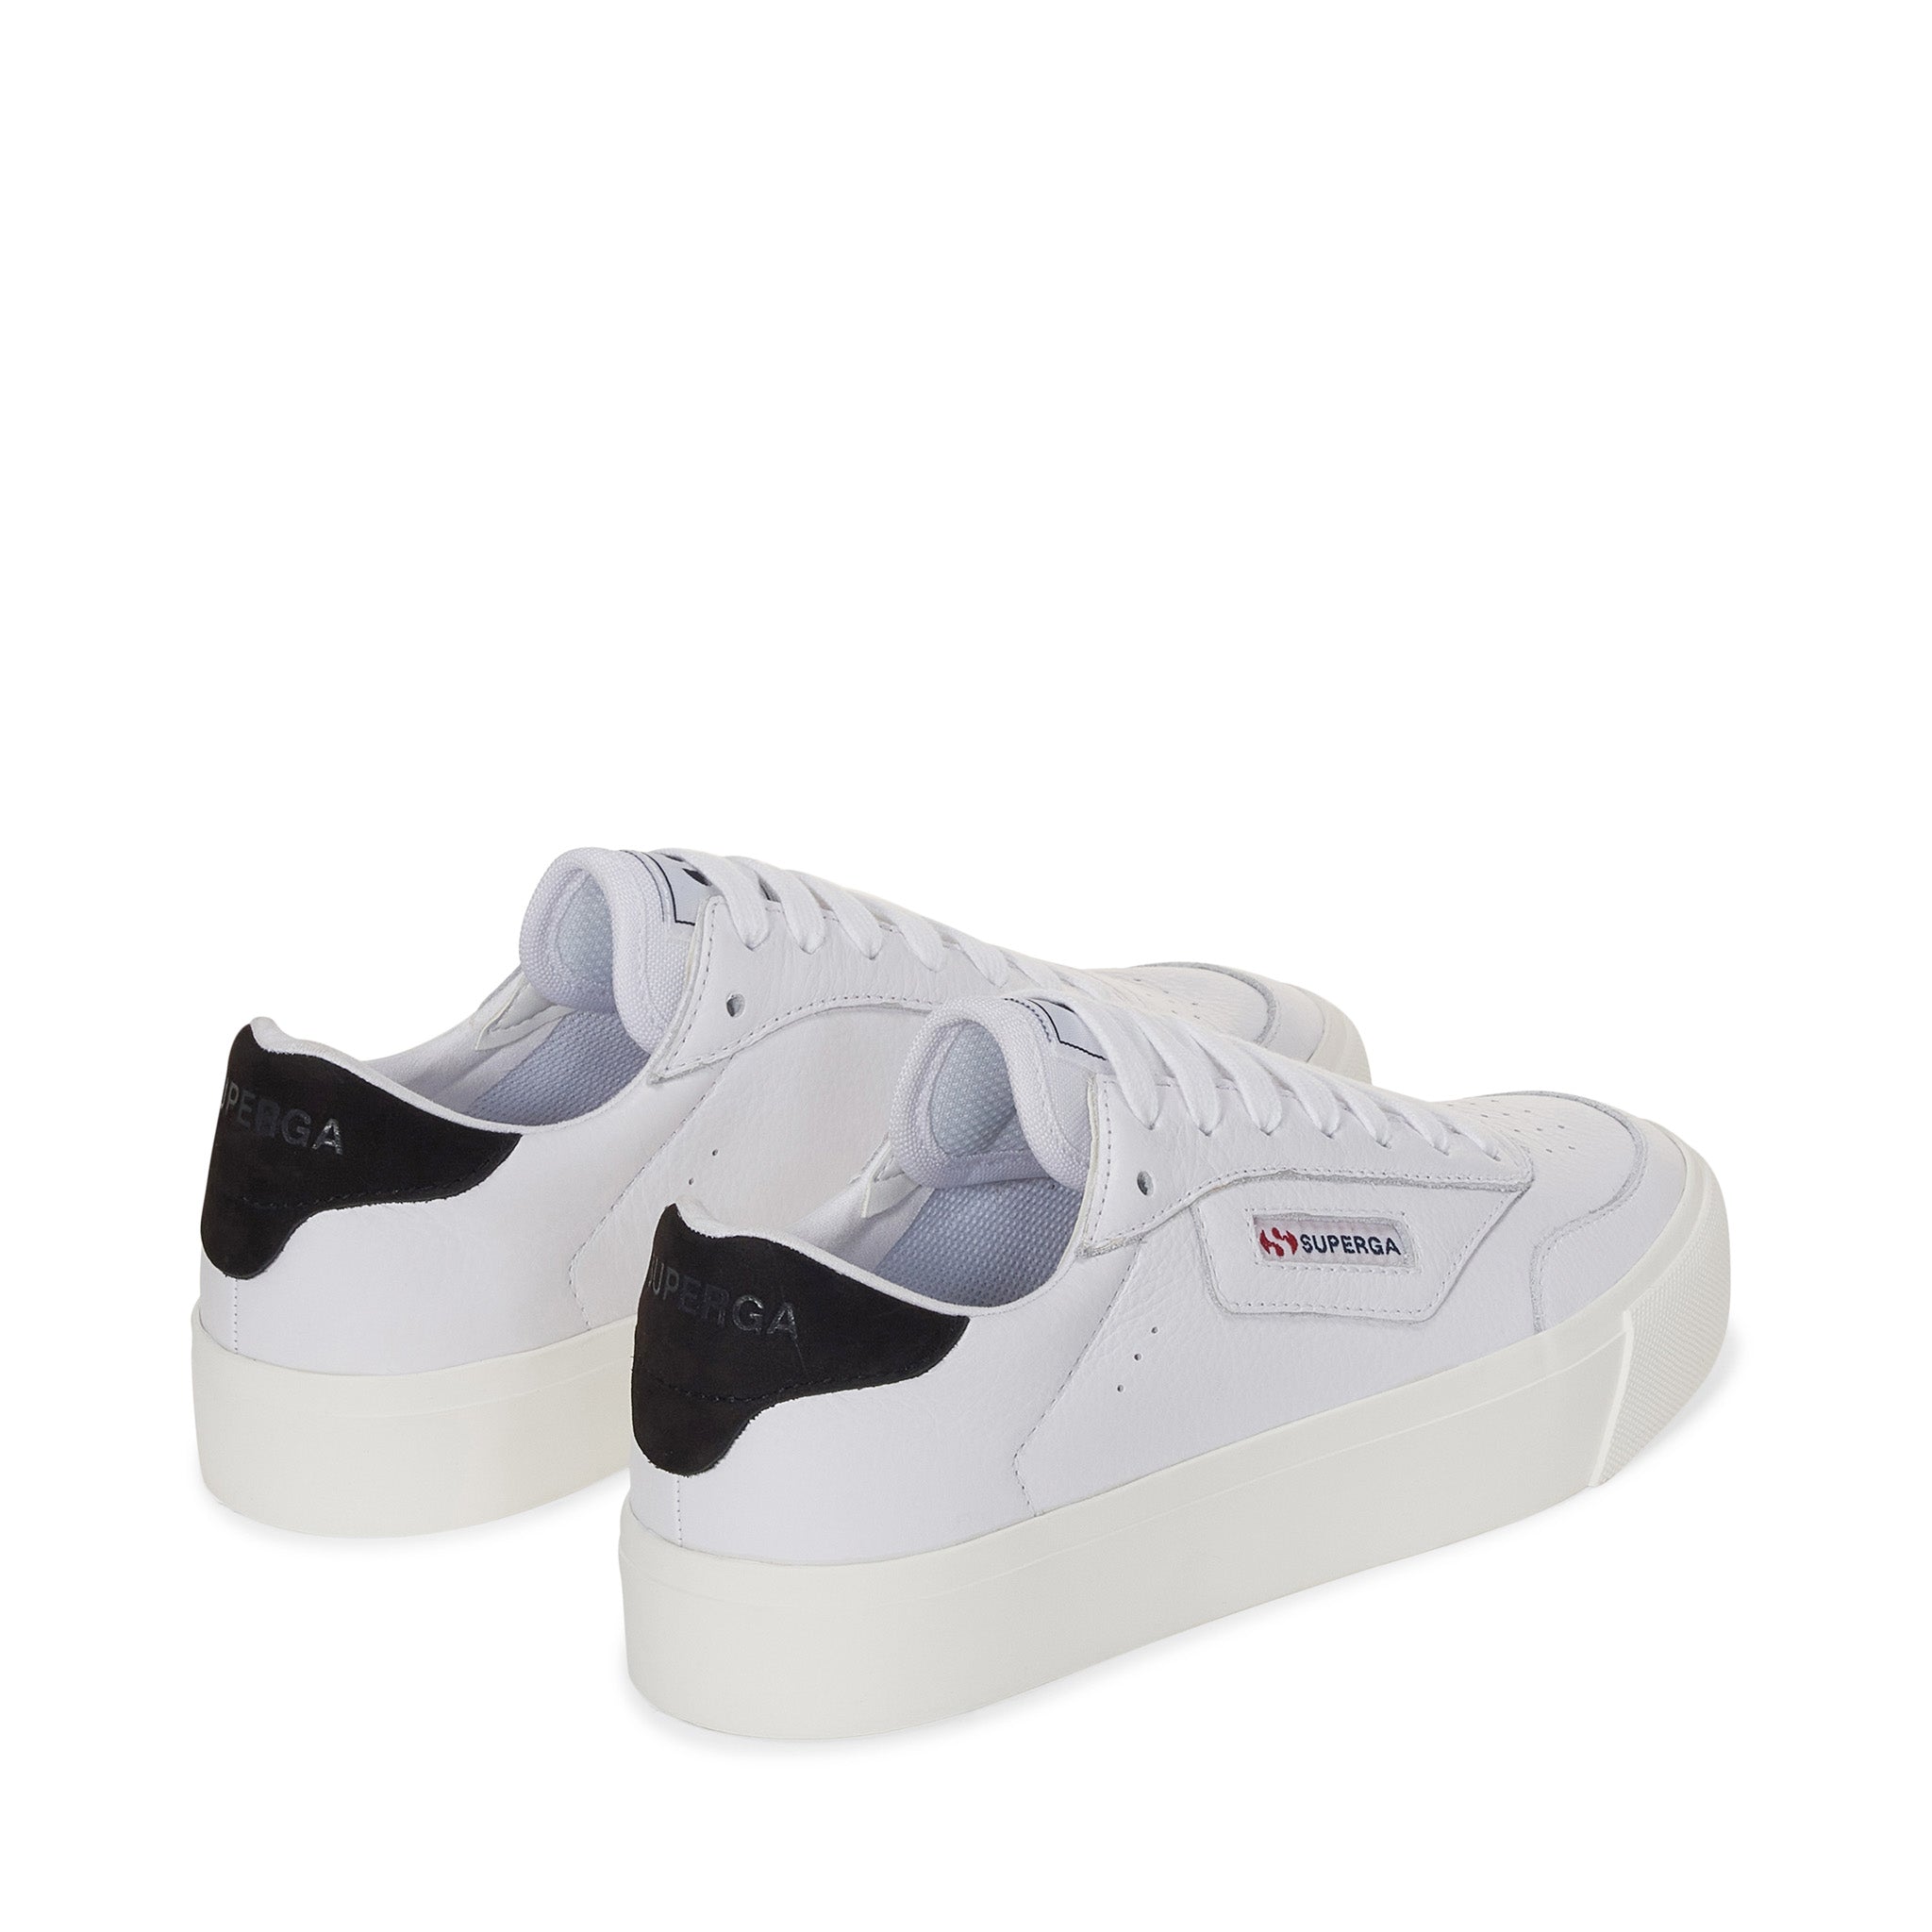 Superga 3843 Court Sneakers - White Bristol Black Avorio. Back view.